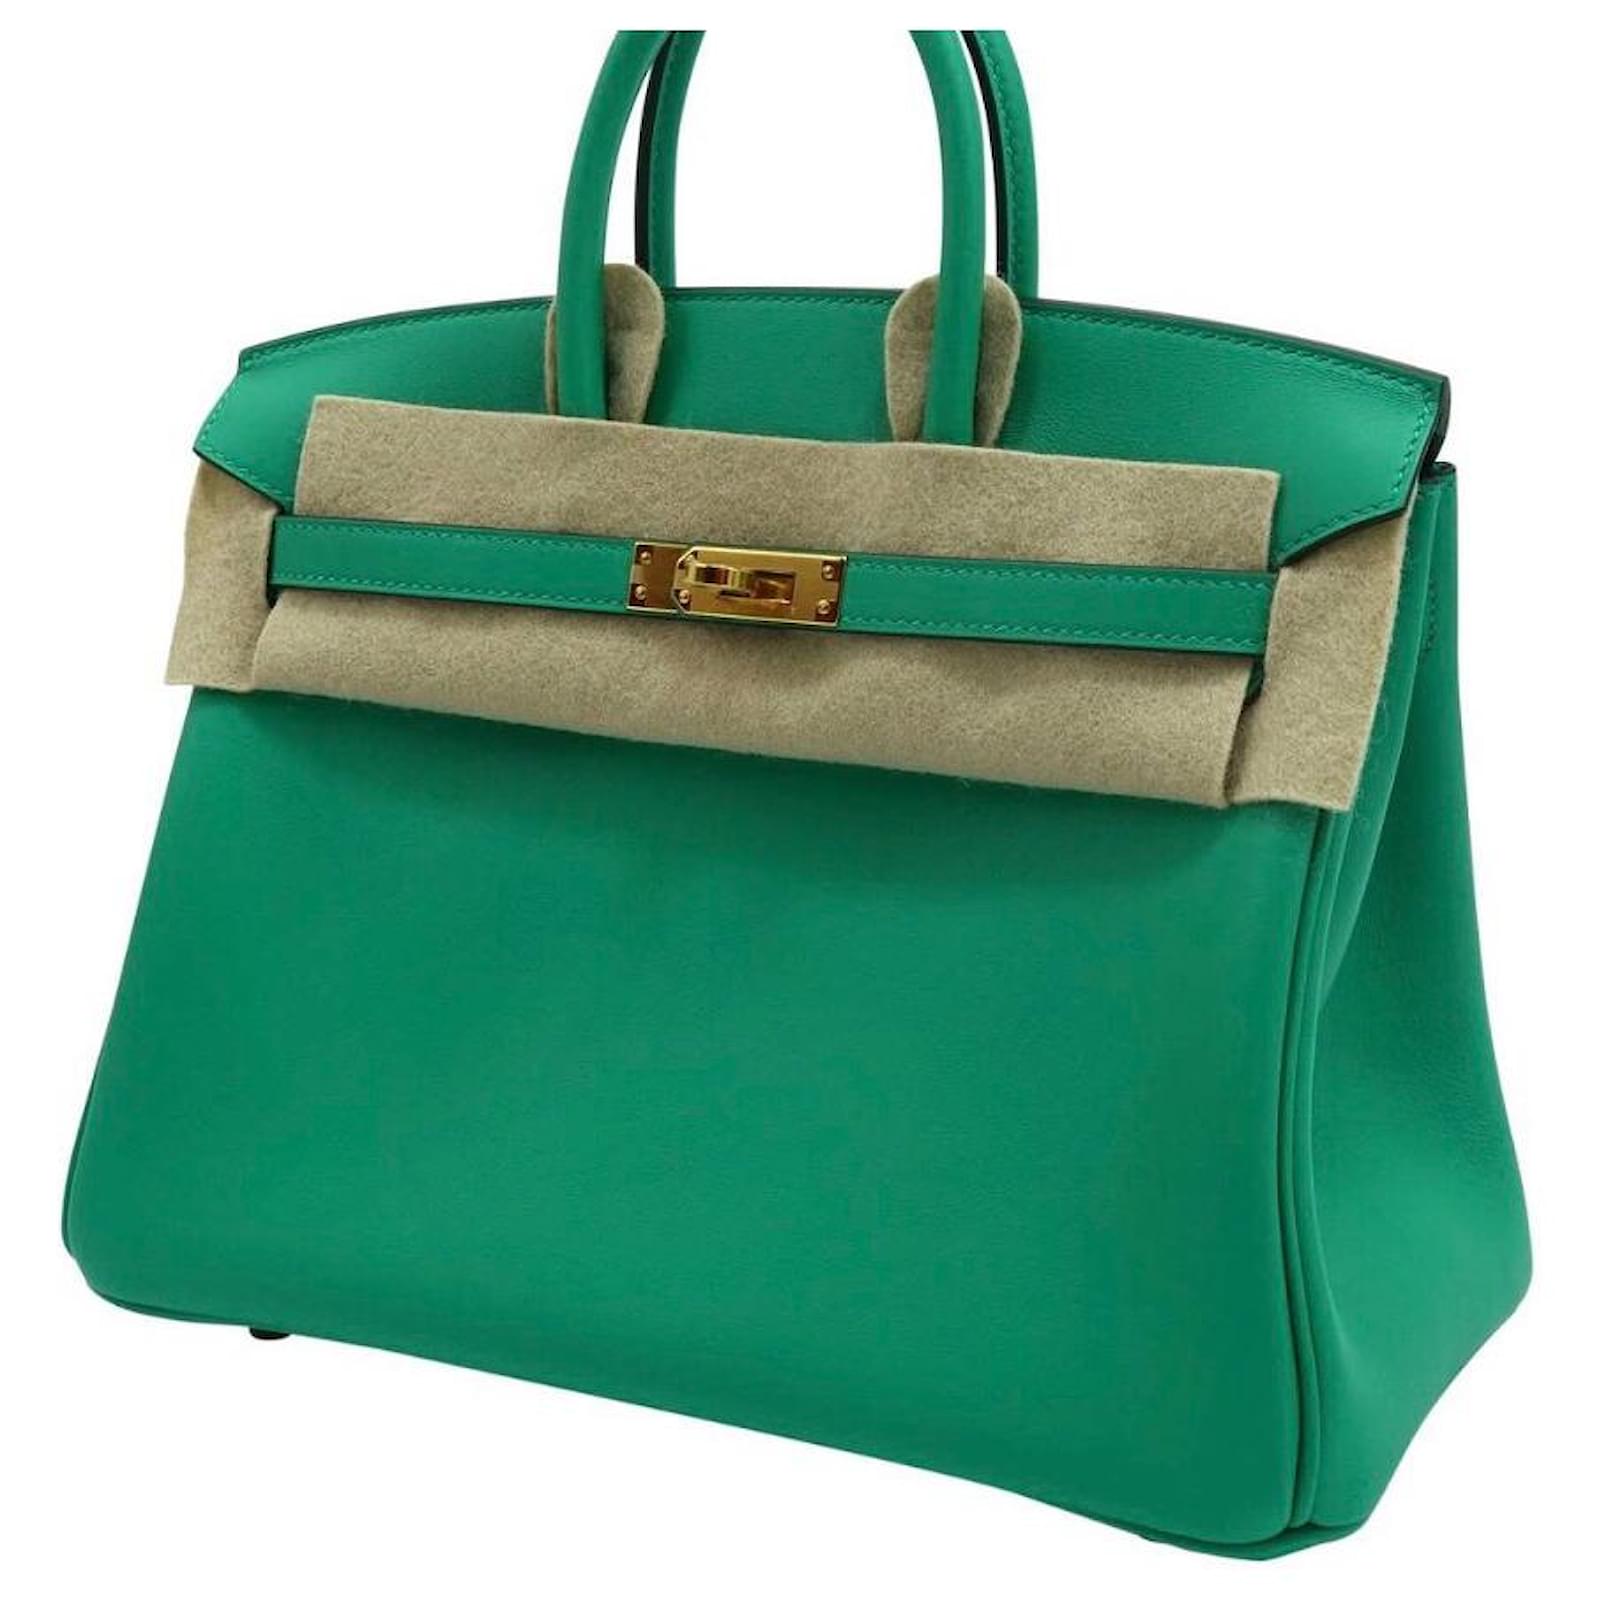 Hermes Green Handbags